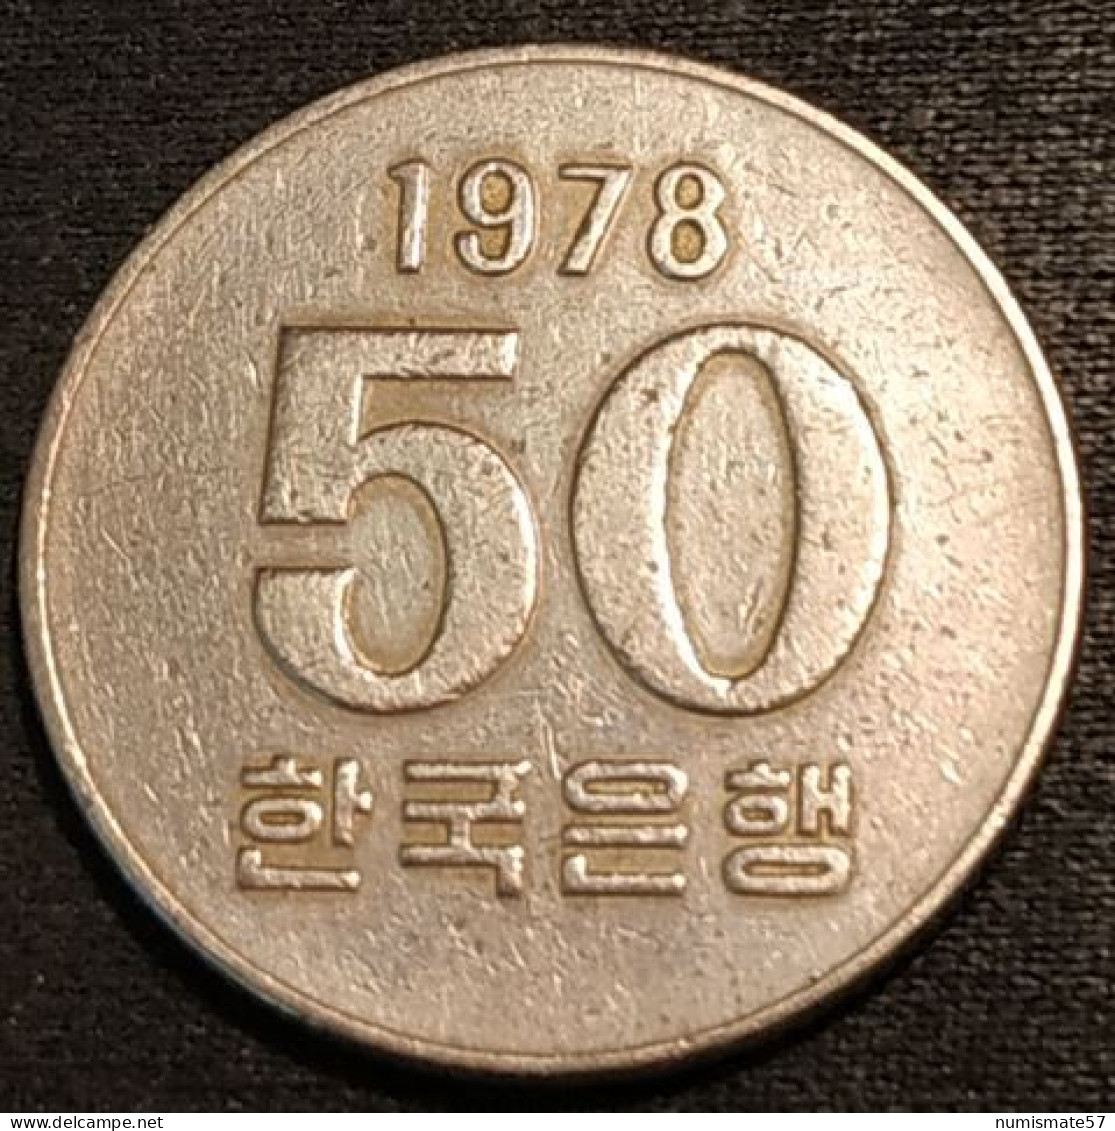 COREE DU SUD - SOUTH KOREA - 50 WON 1978 - KM 20 - Korea (Süd-)